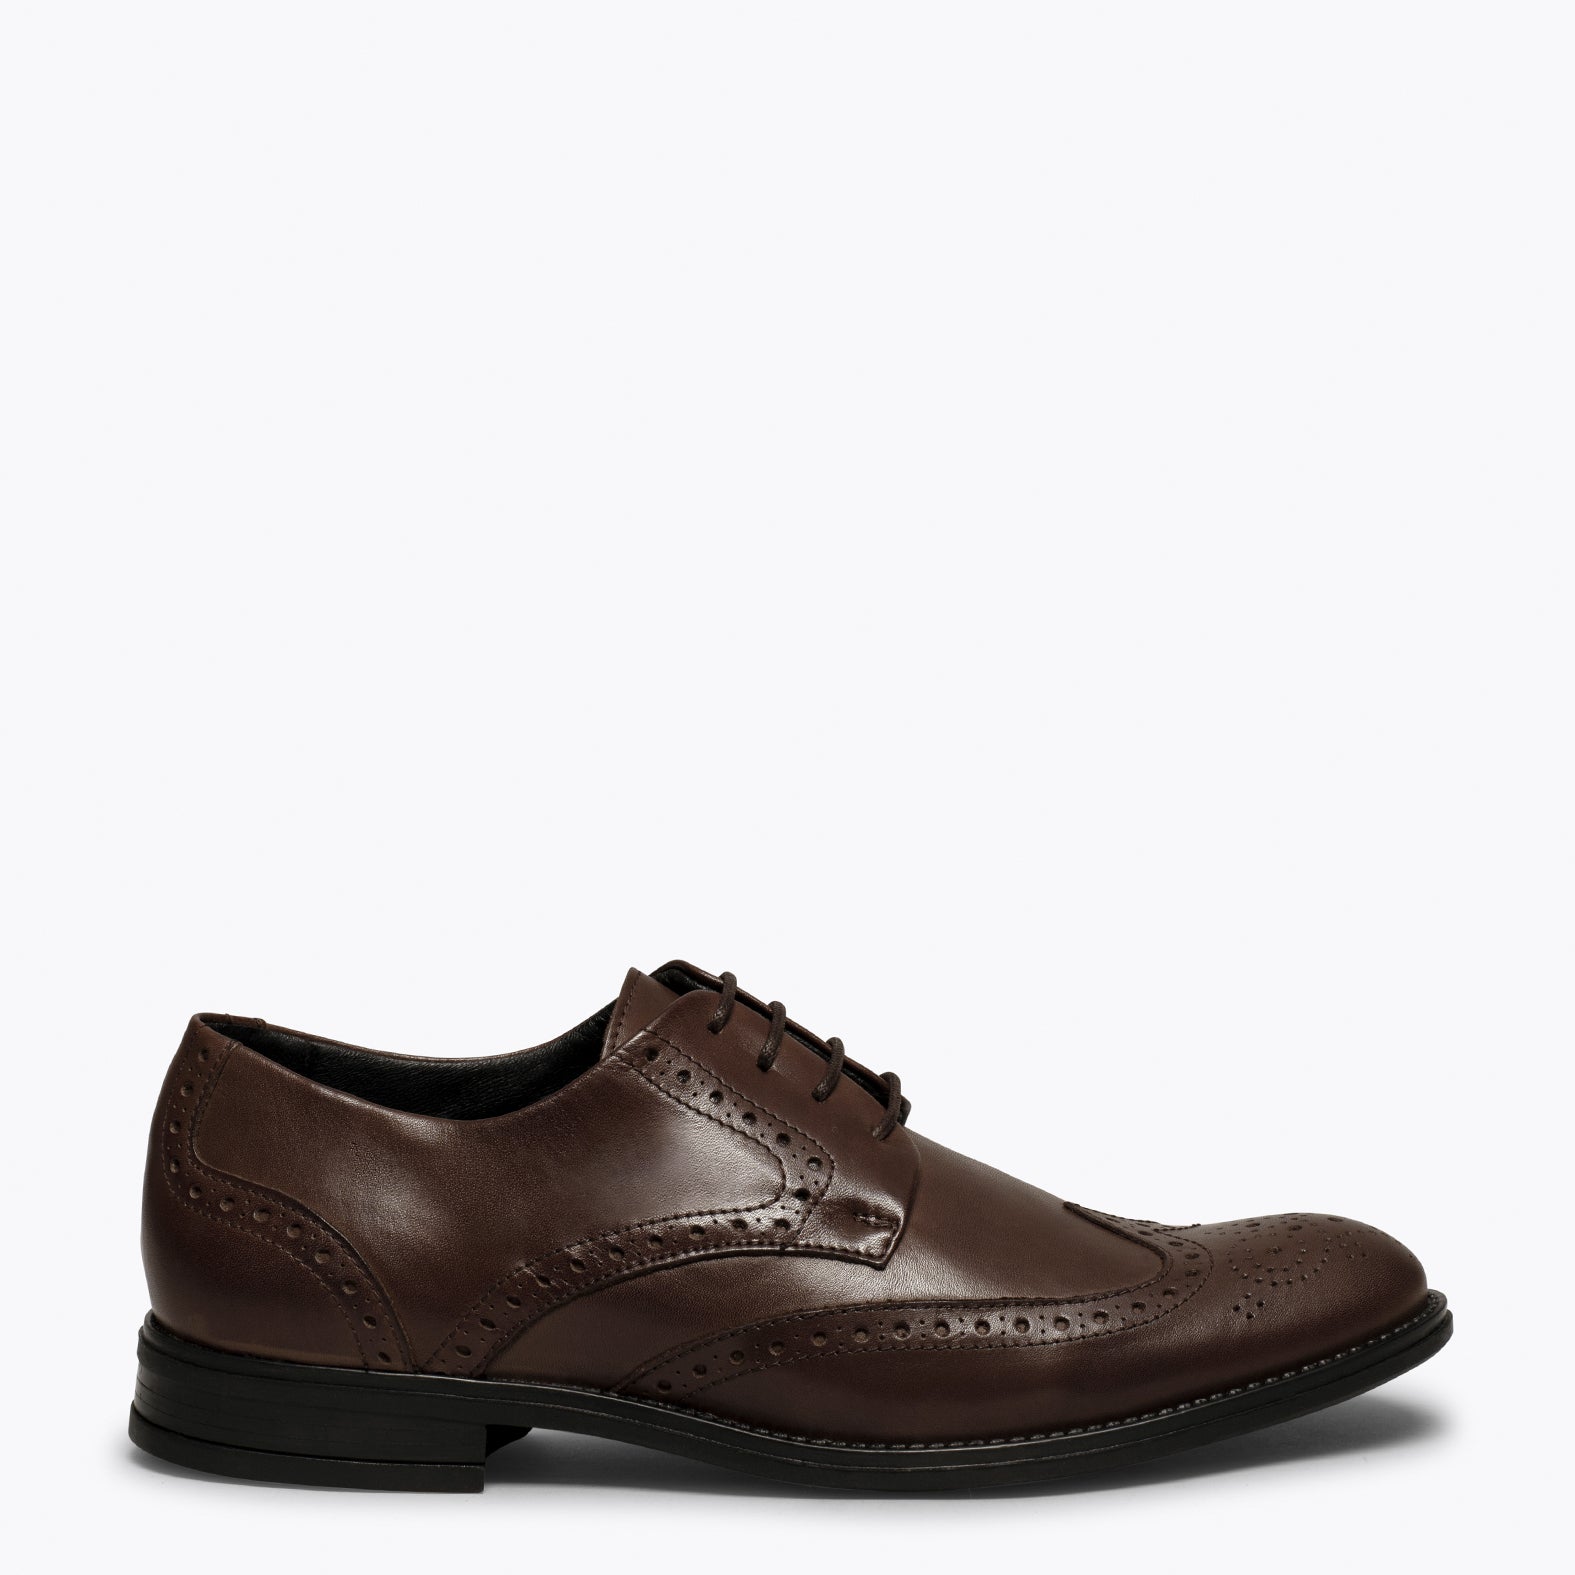 OXFORD- BROWN Oxford shoe for men